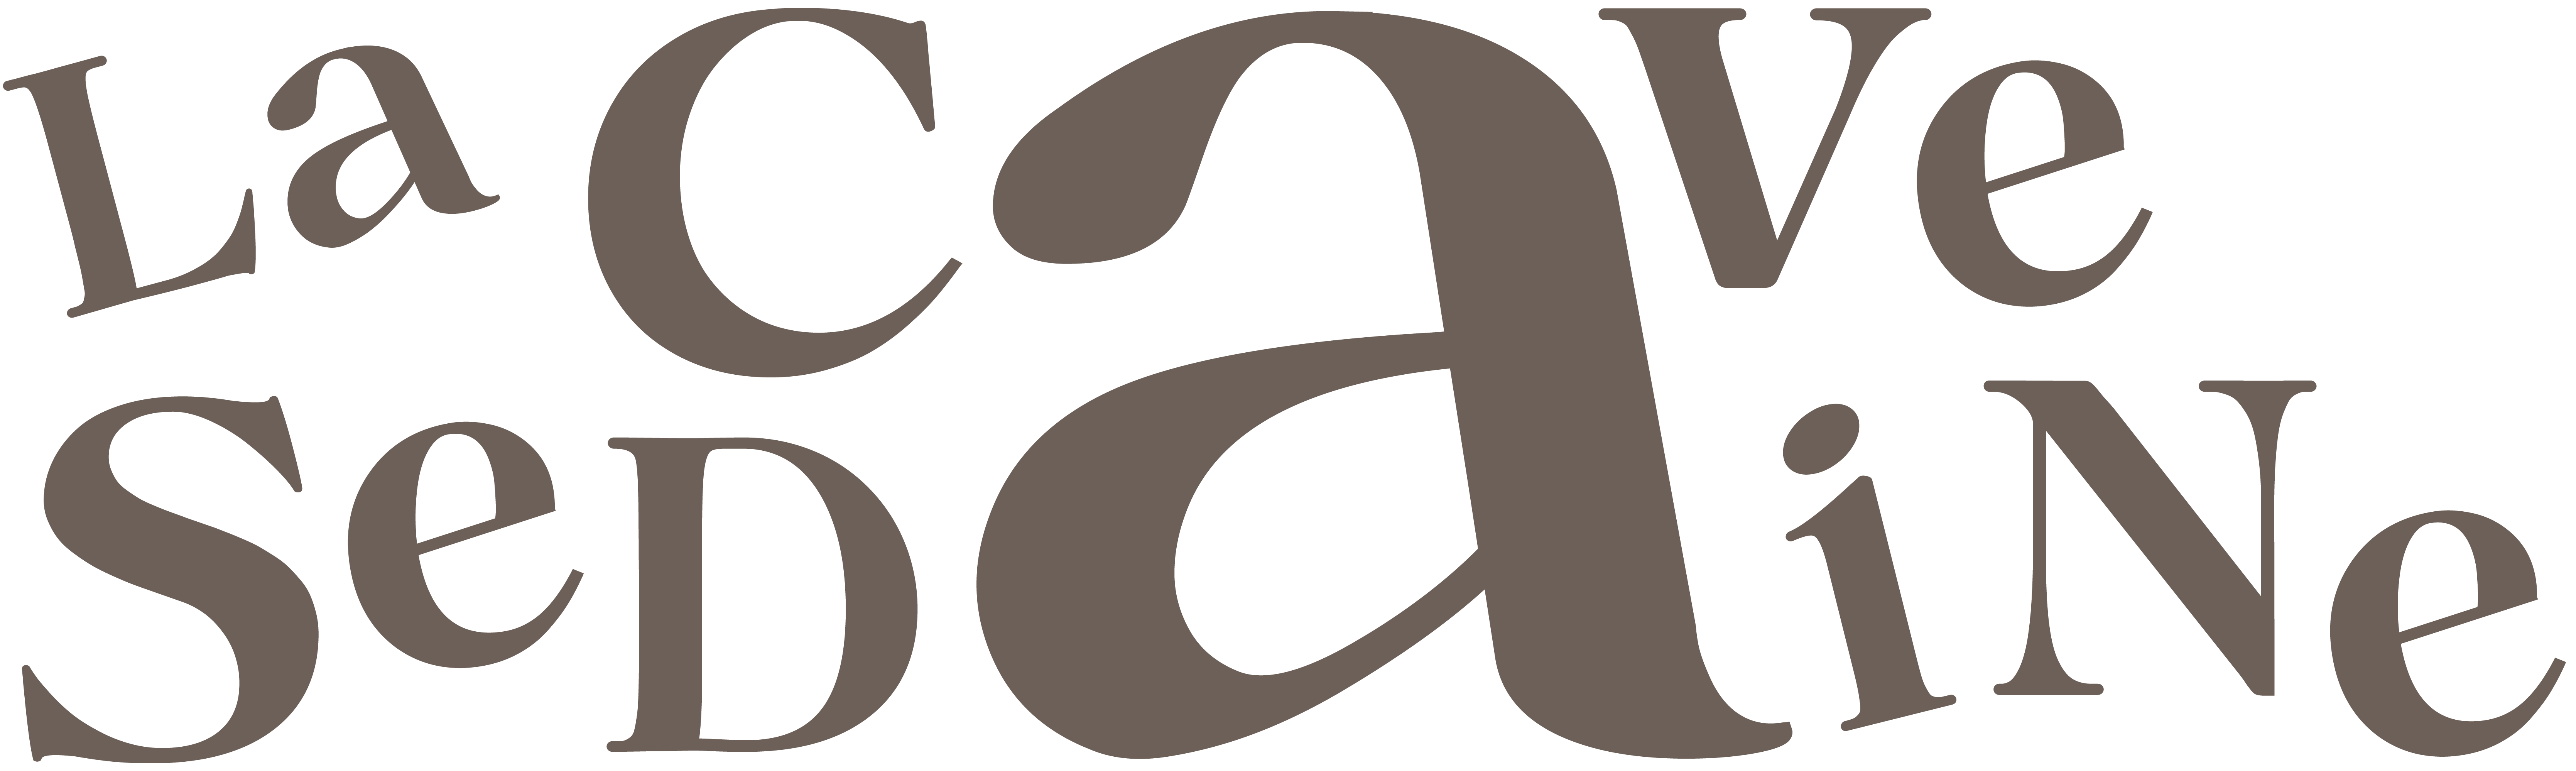 Template Logo